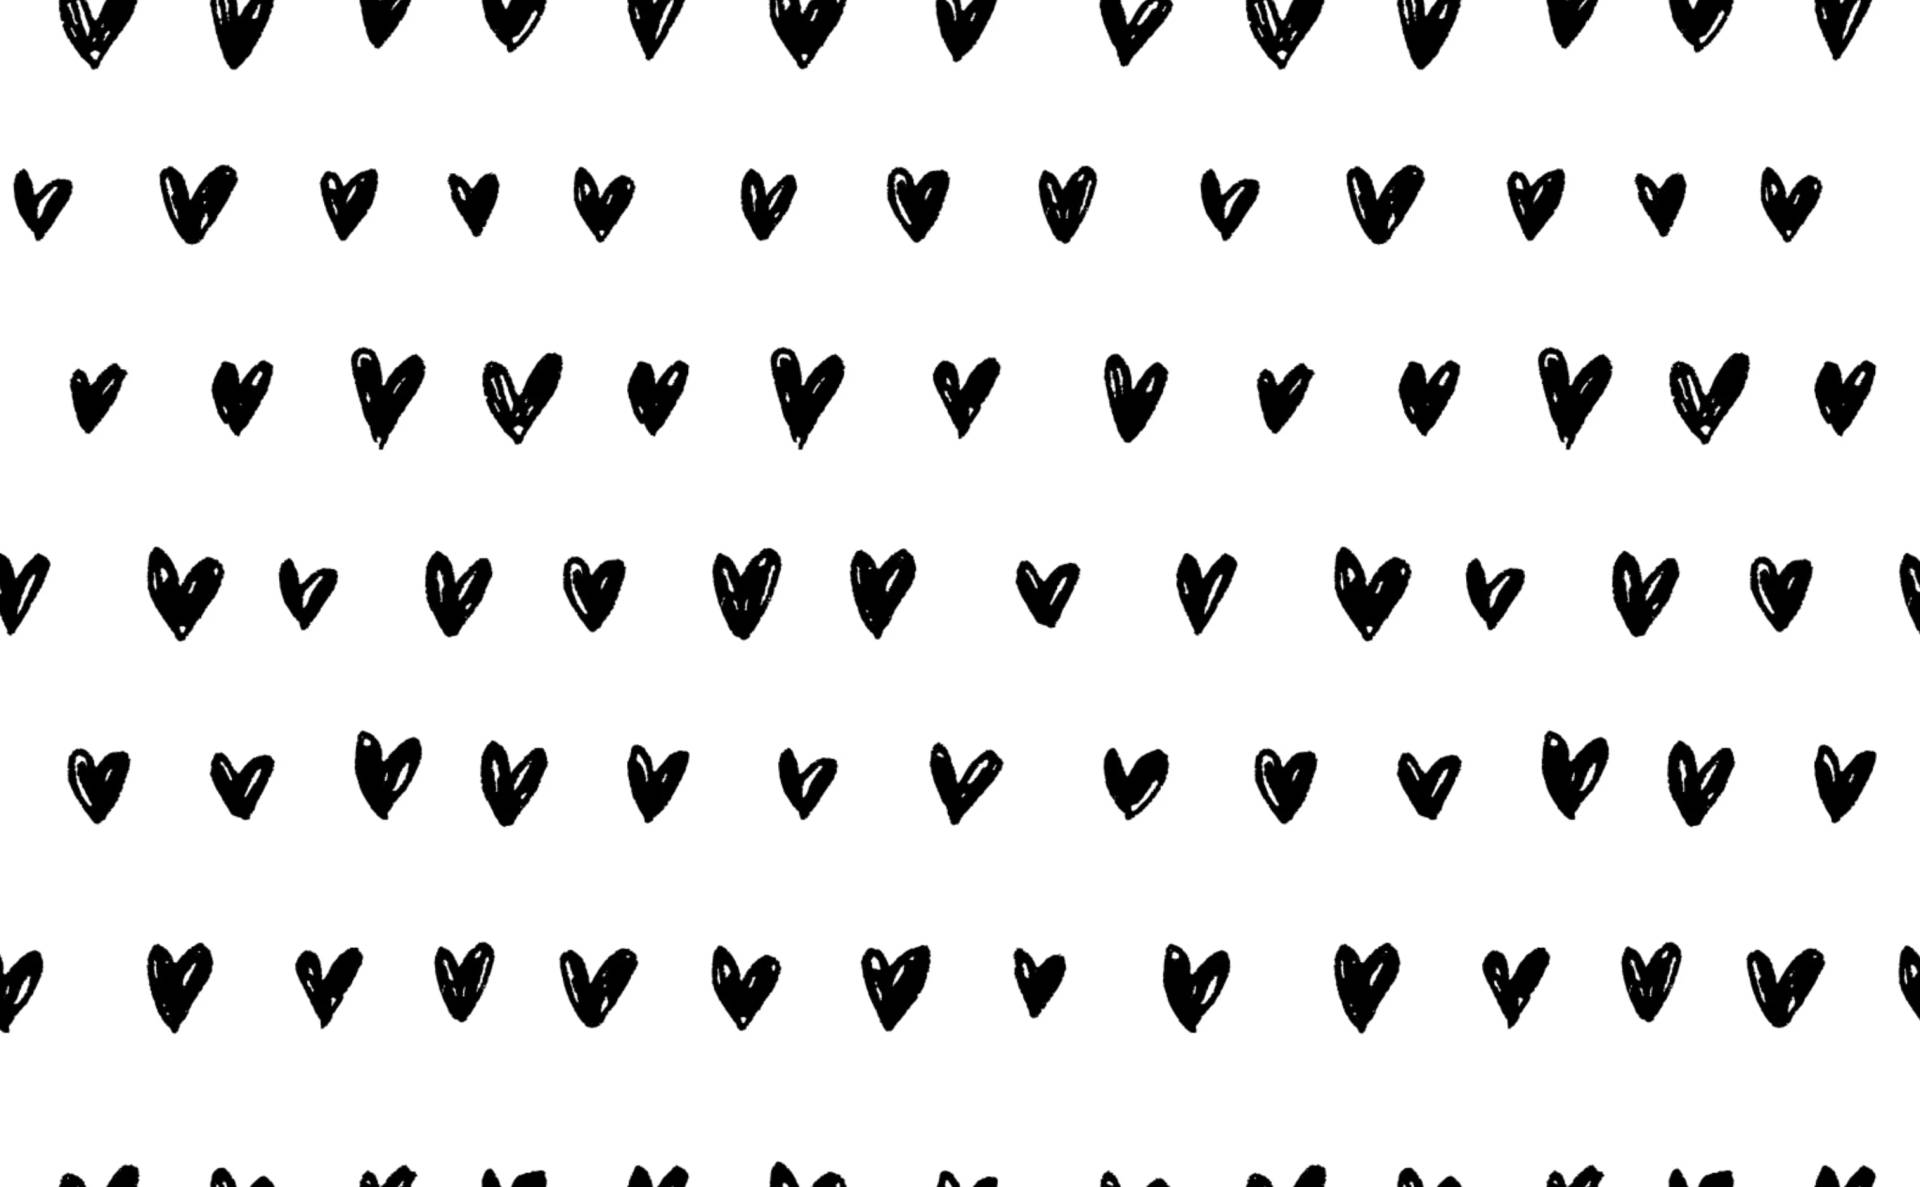 Free Love Black And White Wallpaper Downloads, [100+] Love Black And White  Wallpapers for FREE 